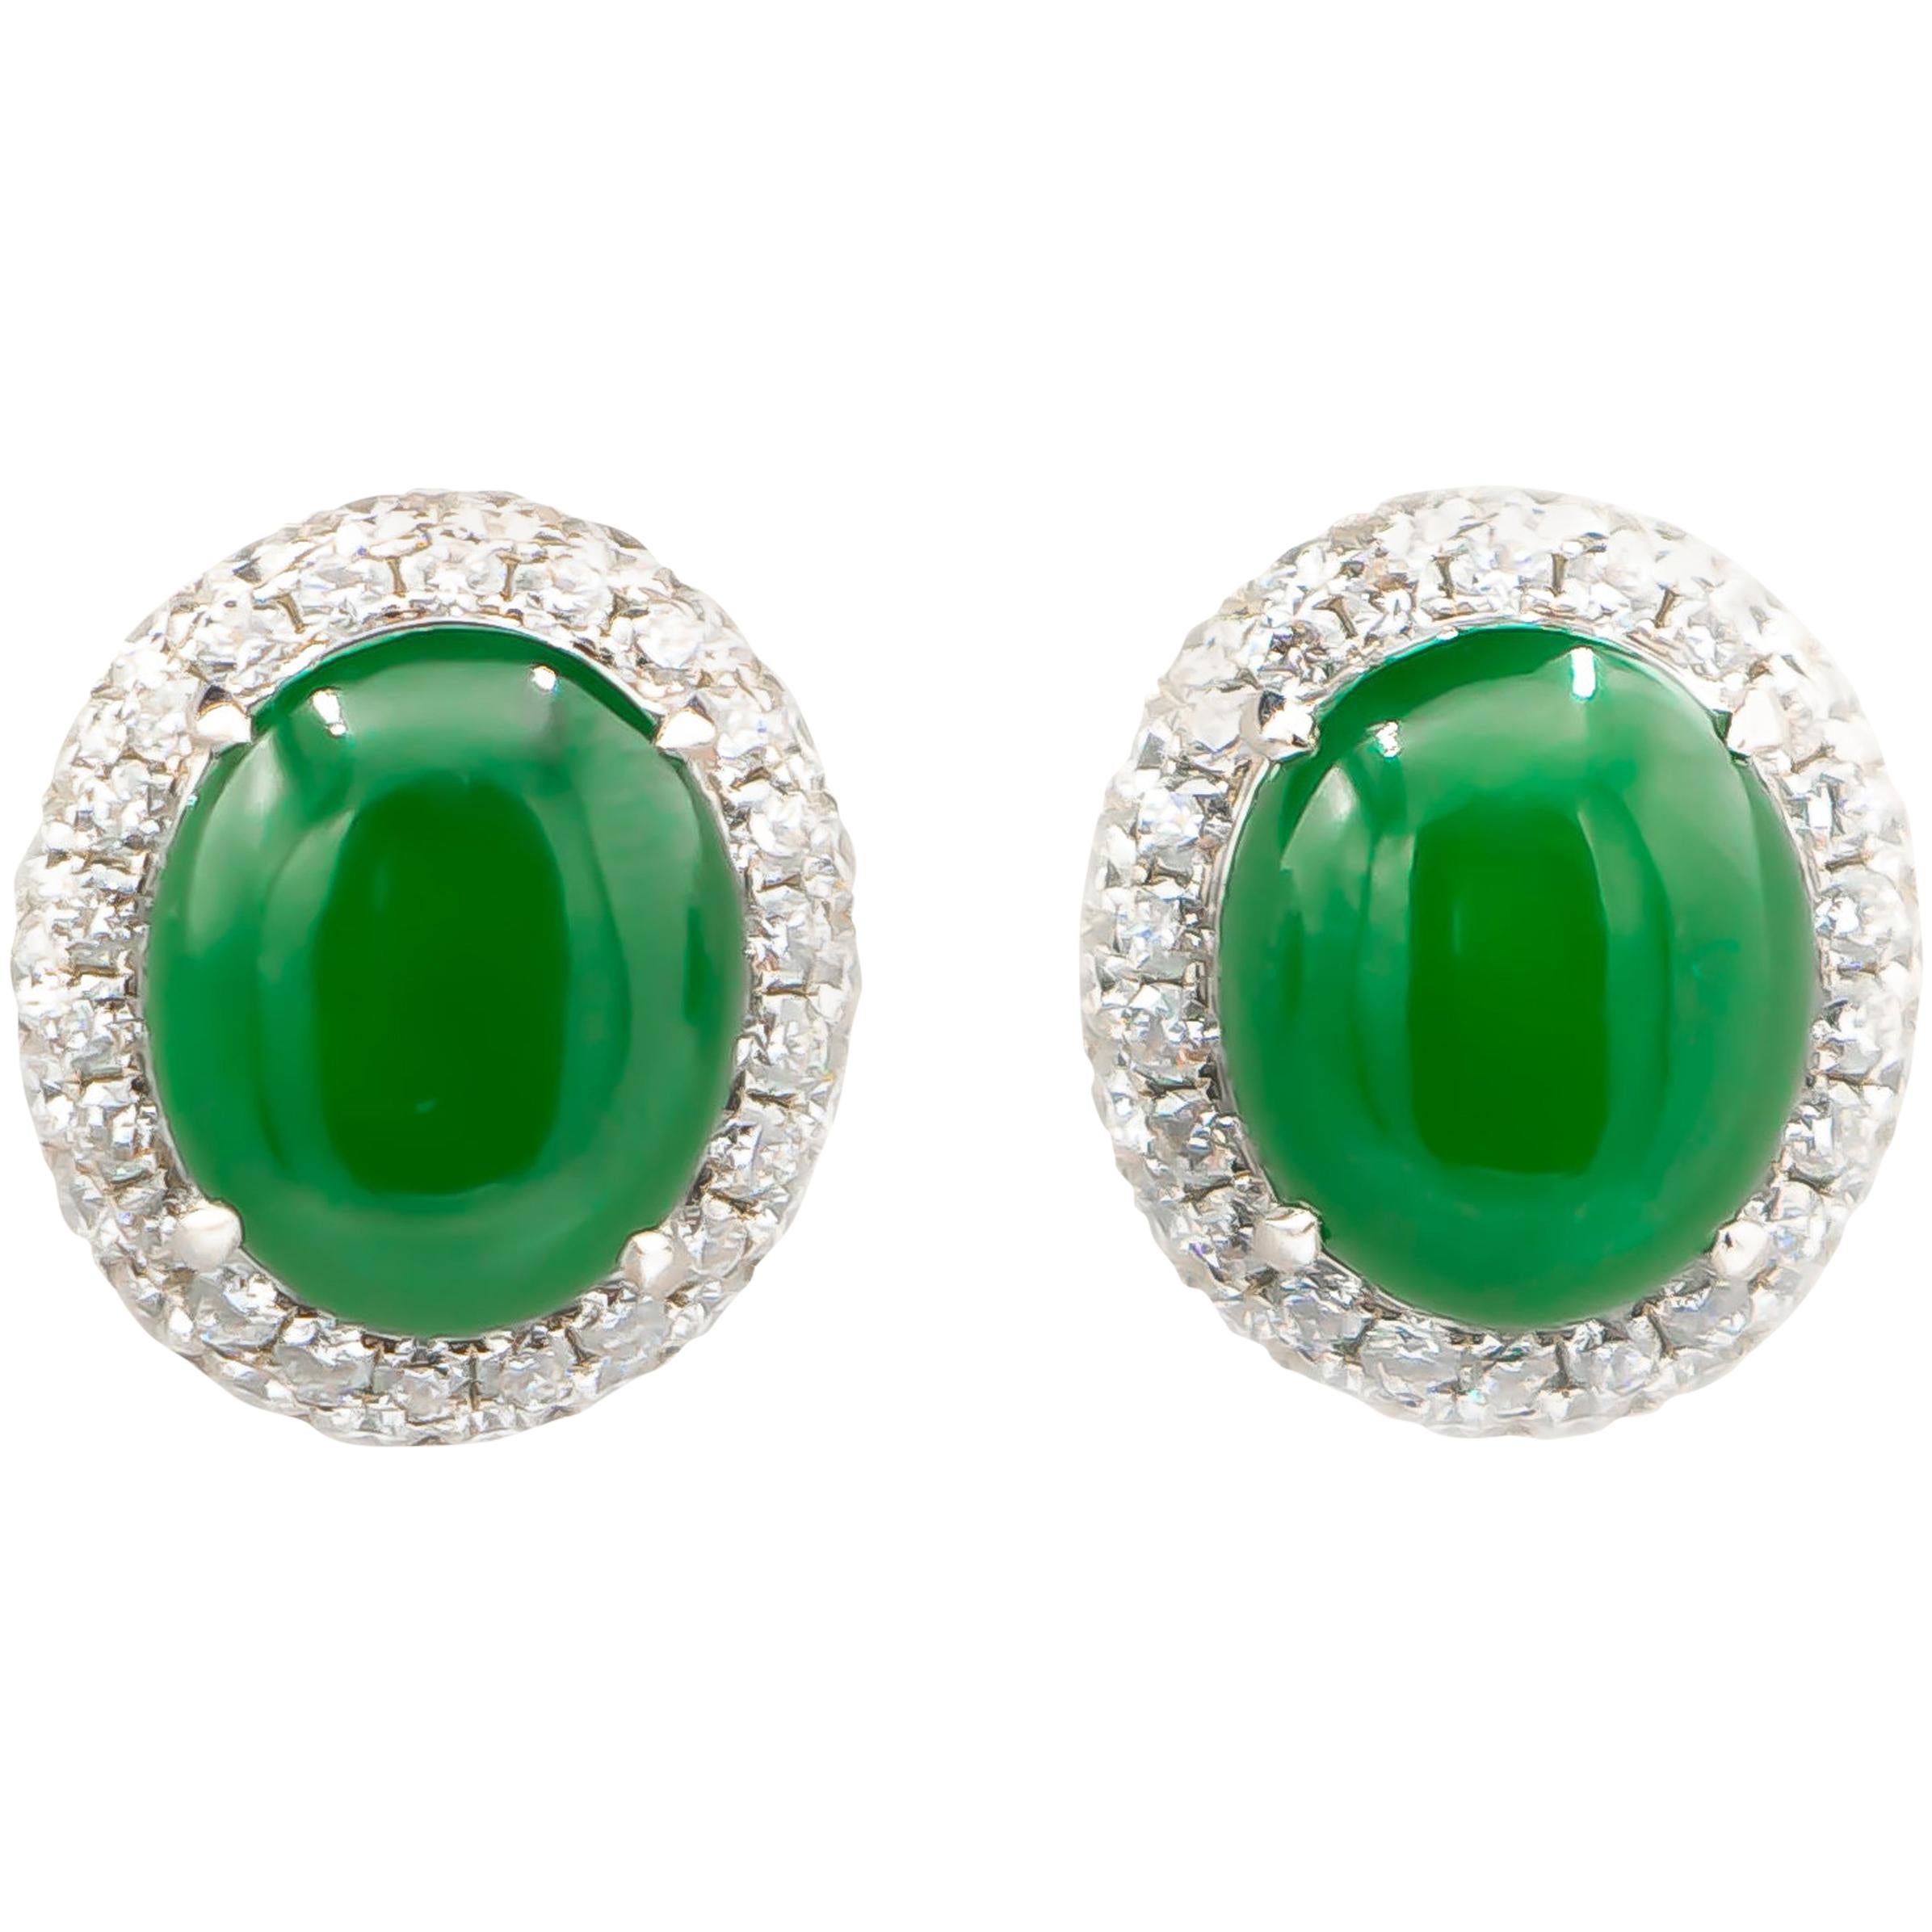 HKJS Certified Natural Fei Cui Jade Earrings with Diamonds 2.80 Carat